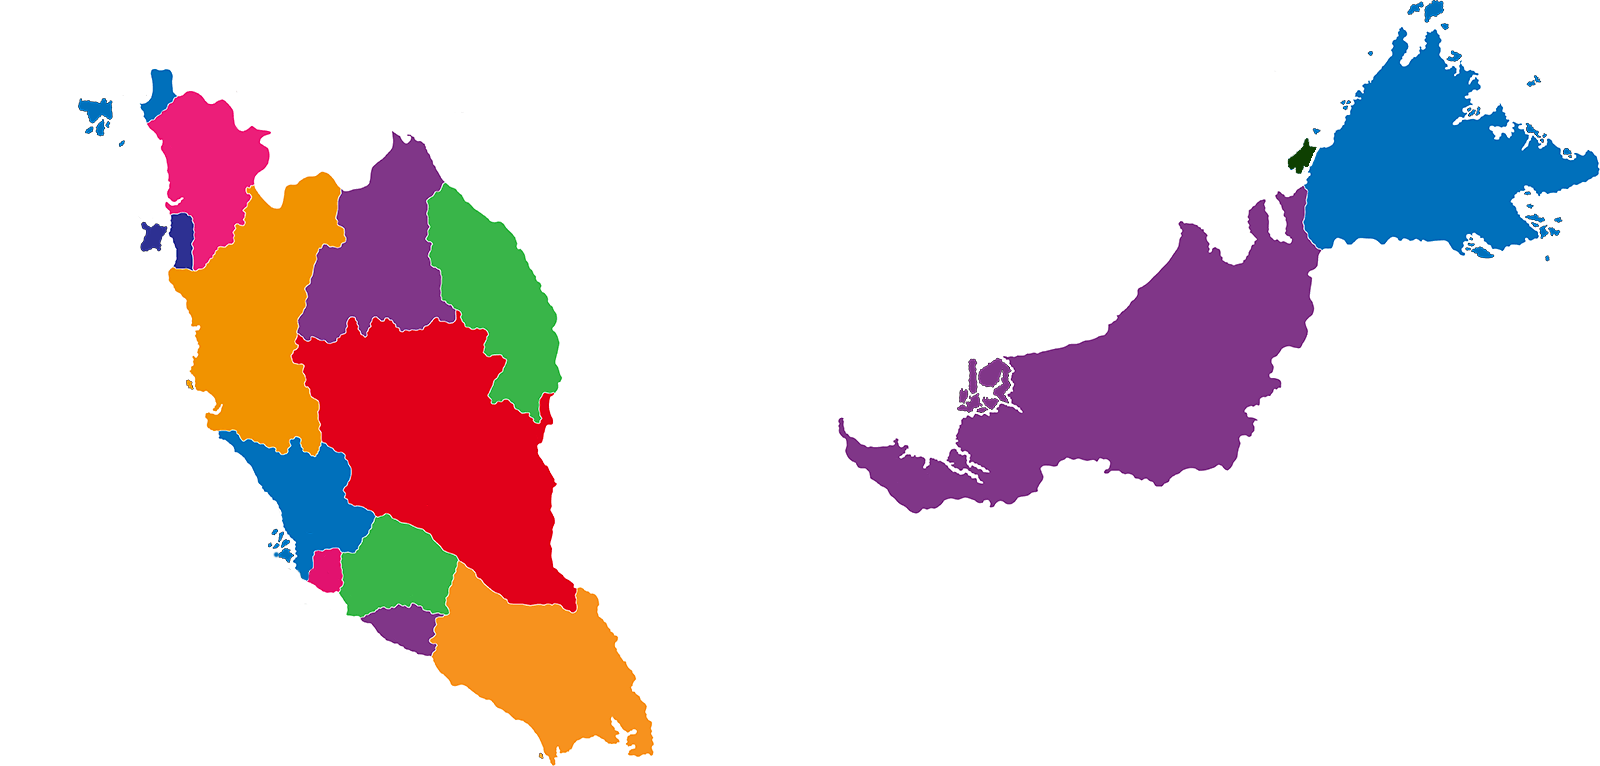 peta malaysia